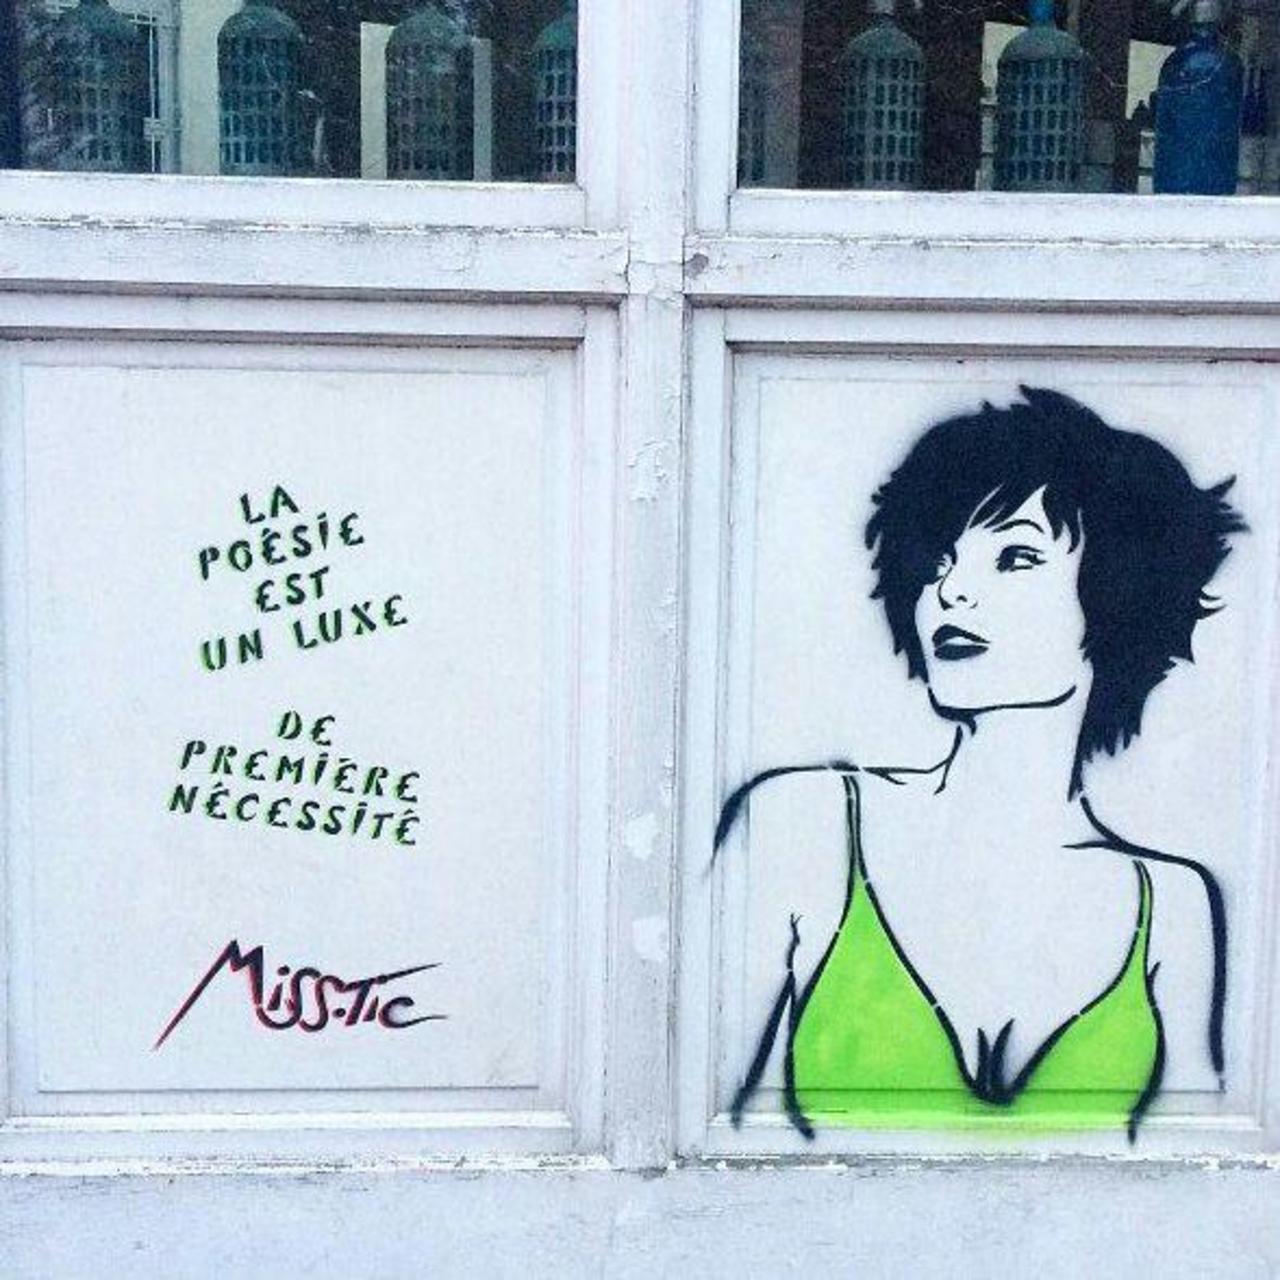 #Paris #graffiti photo by @senyorerre http://ift.tt/1GJjlIT #StreetArt http://t.co/7m576tmrs0